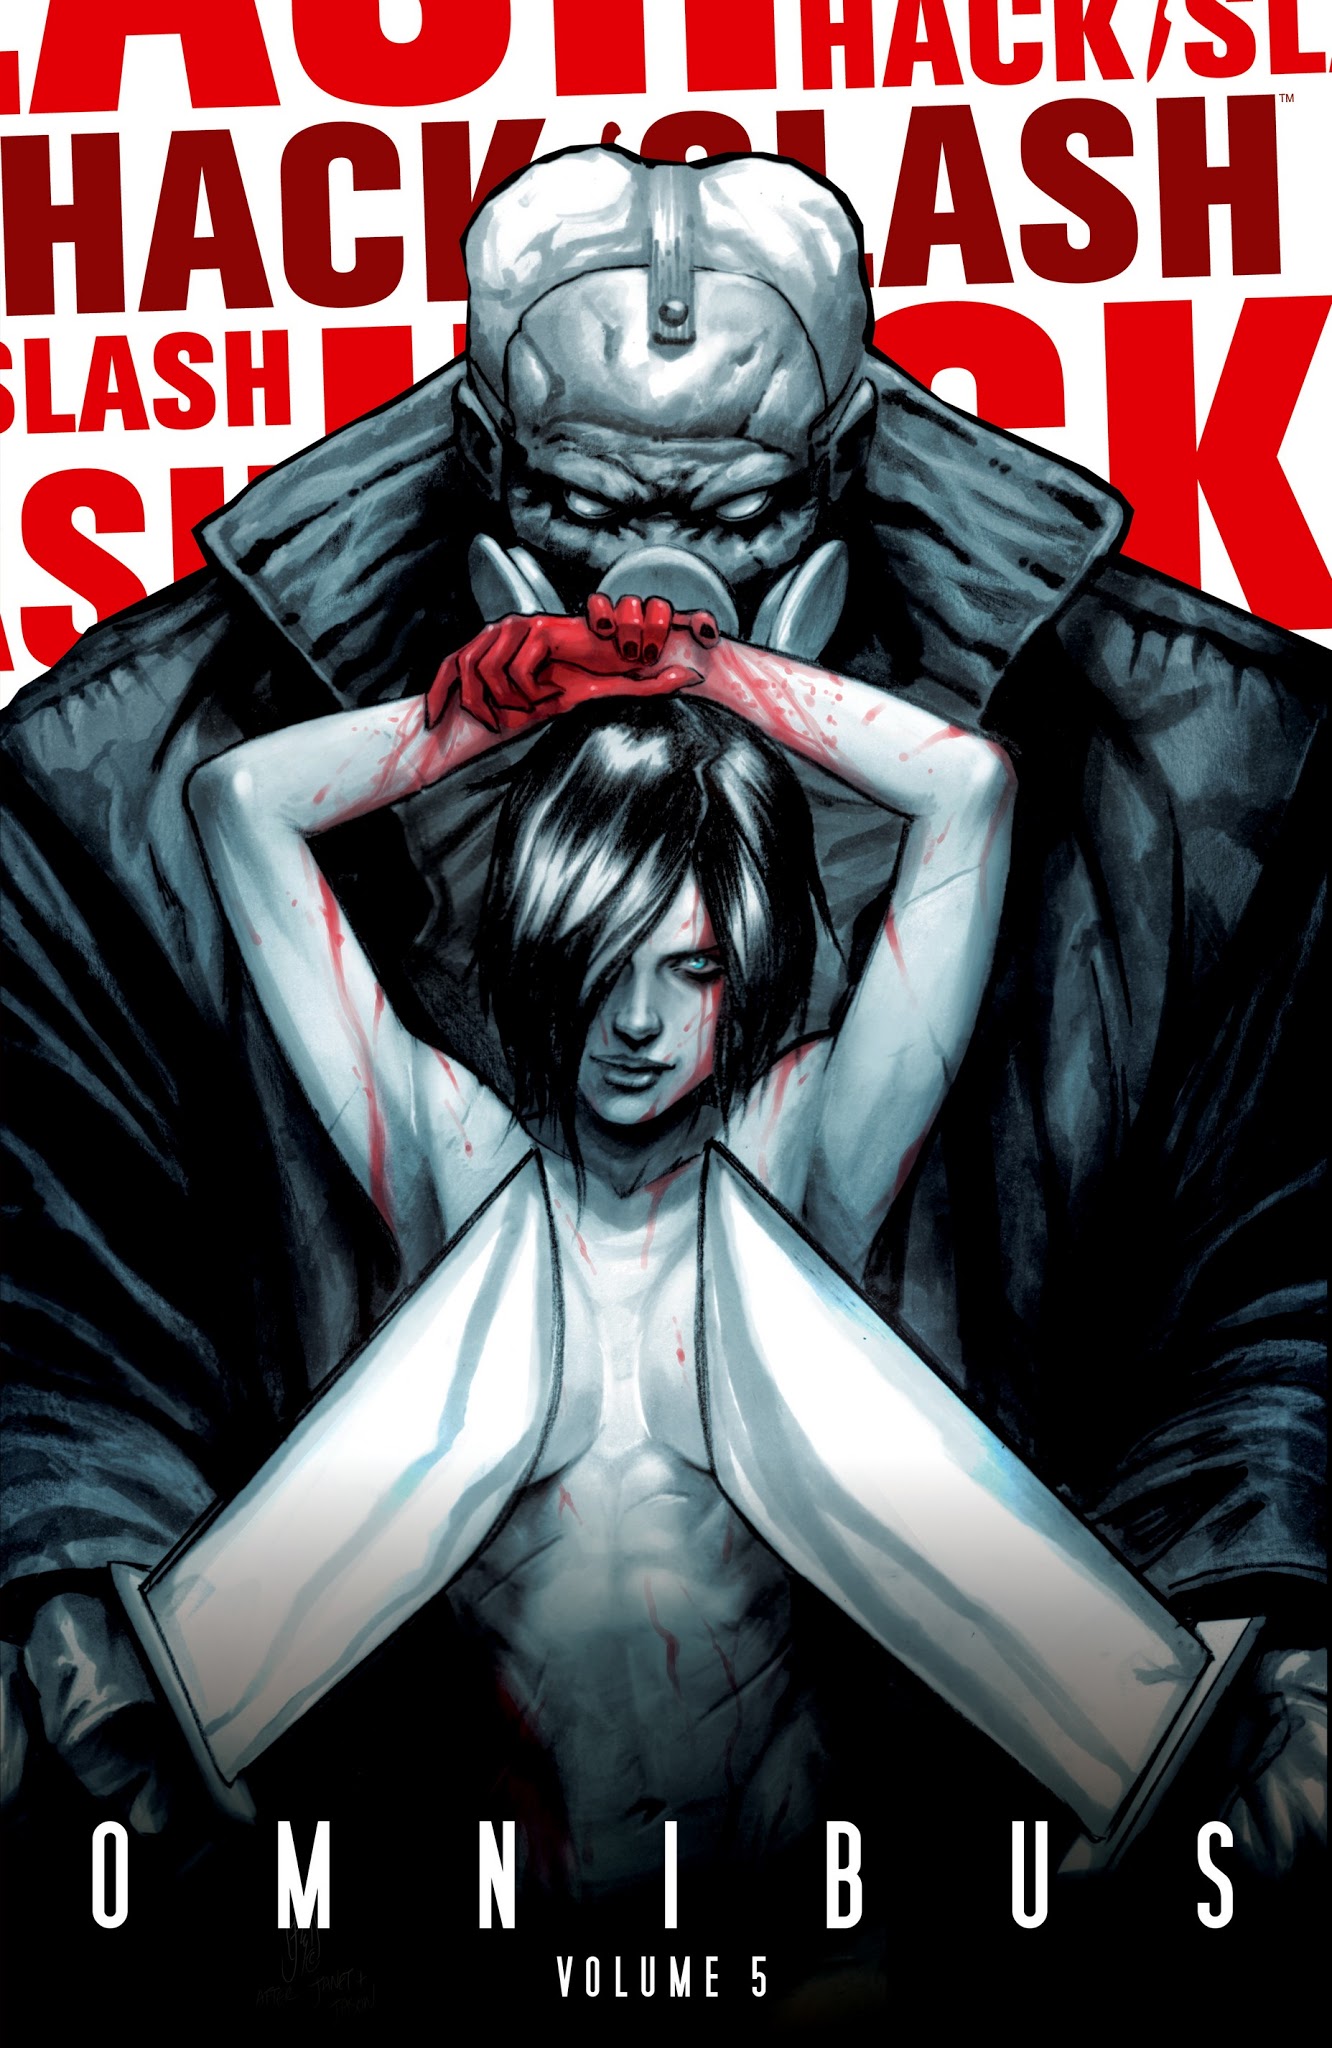 Read online Hack/Slash Omnibus comic -  Issue # TPB 5 (Part 1) - 1